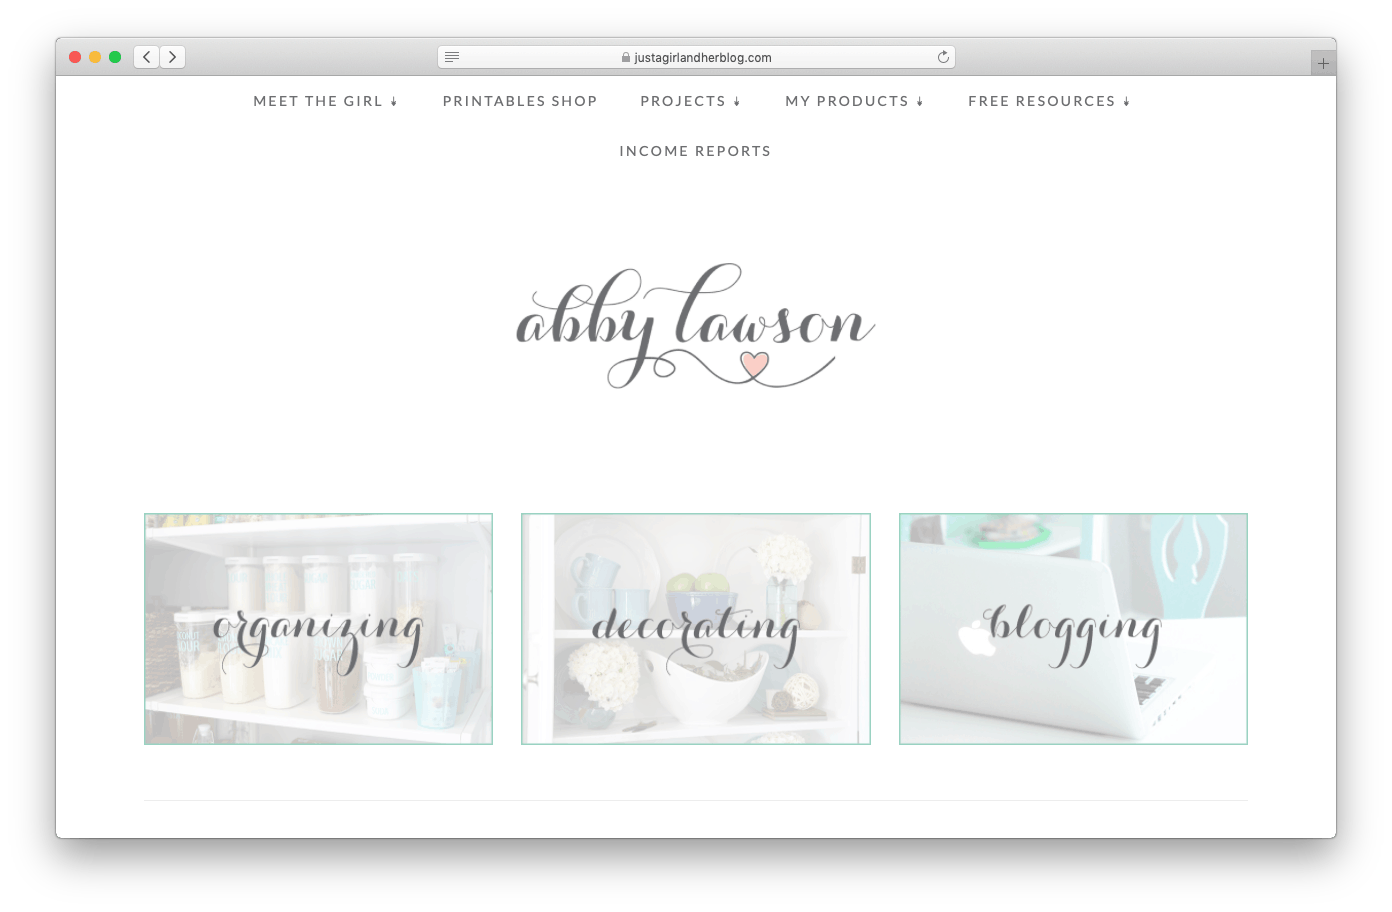 Abby Lawson's Blog